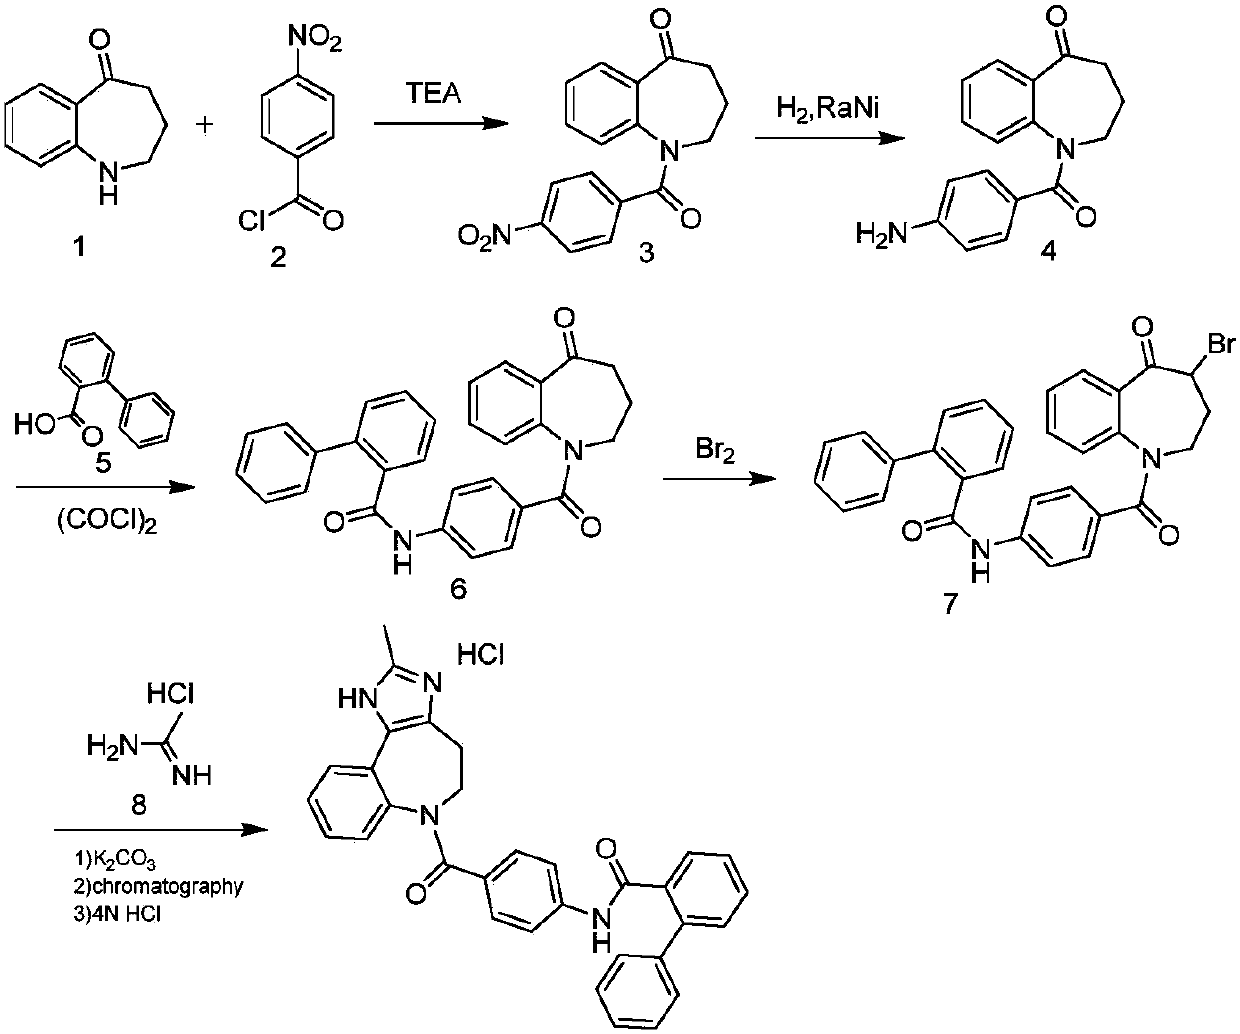 Synthesis of 2-methyl-6-(4-methylbenzenesulfonyl)-1,4,5,6-tetrahydroimidazo[4,5-d][1]benzazepine*